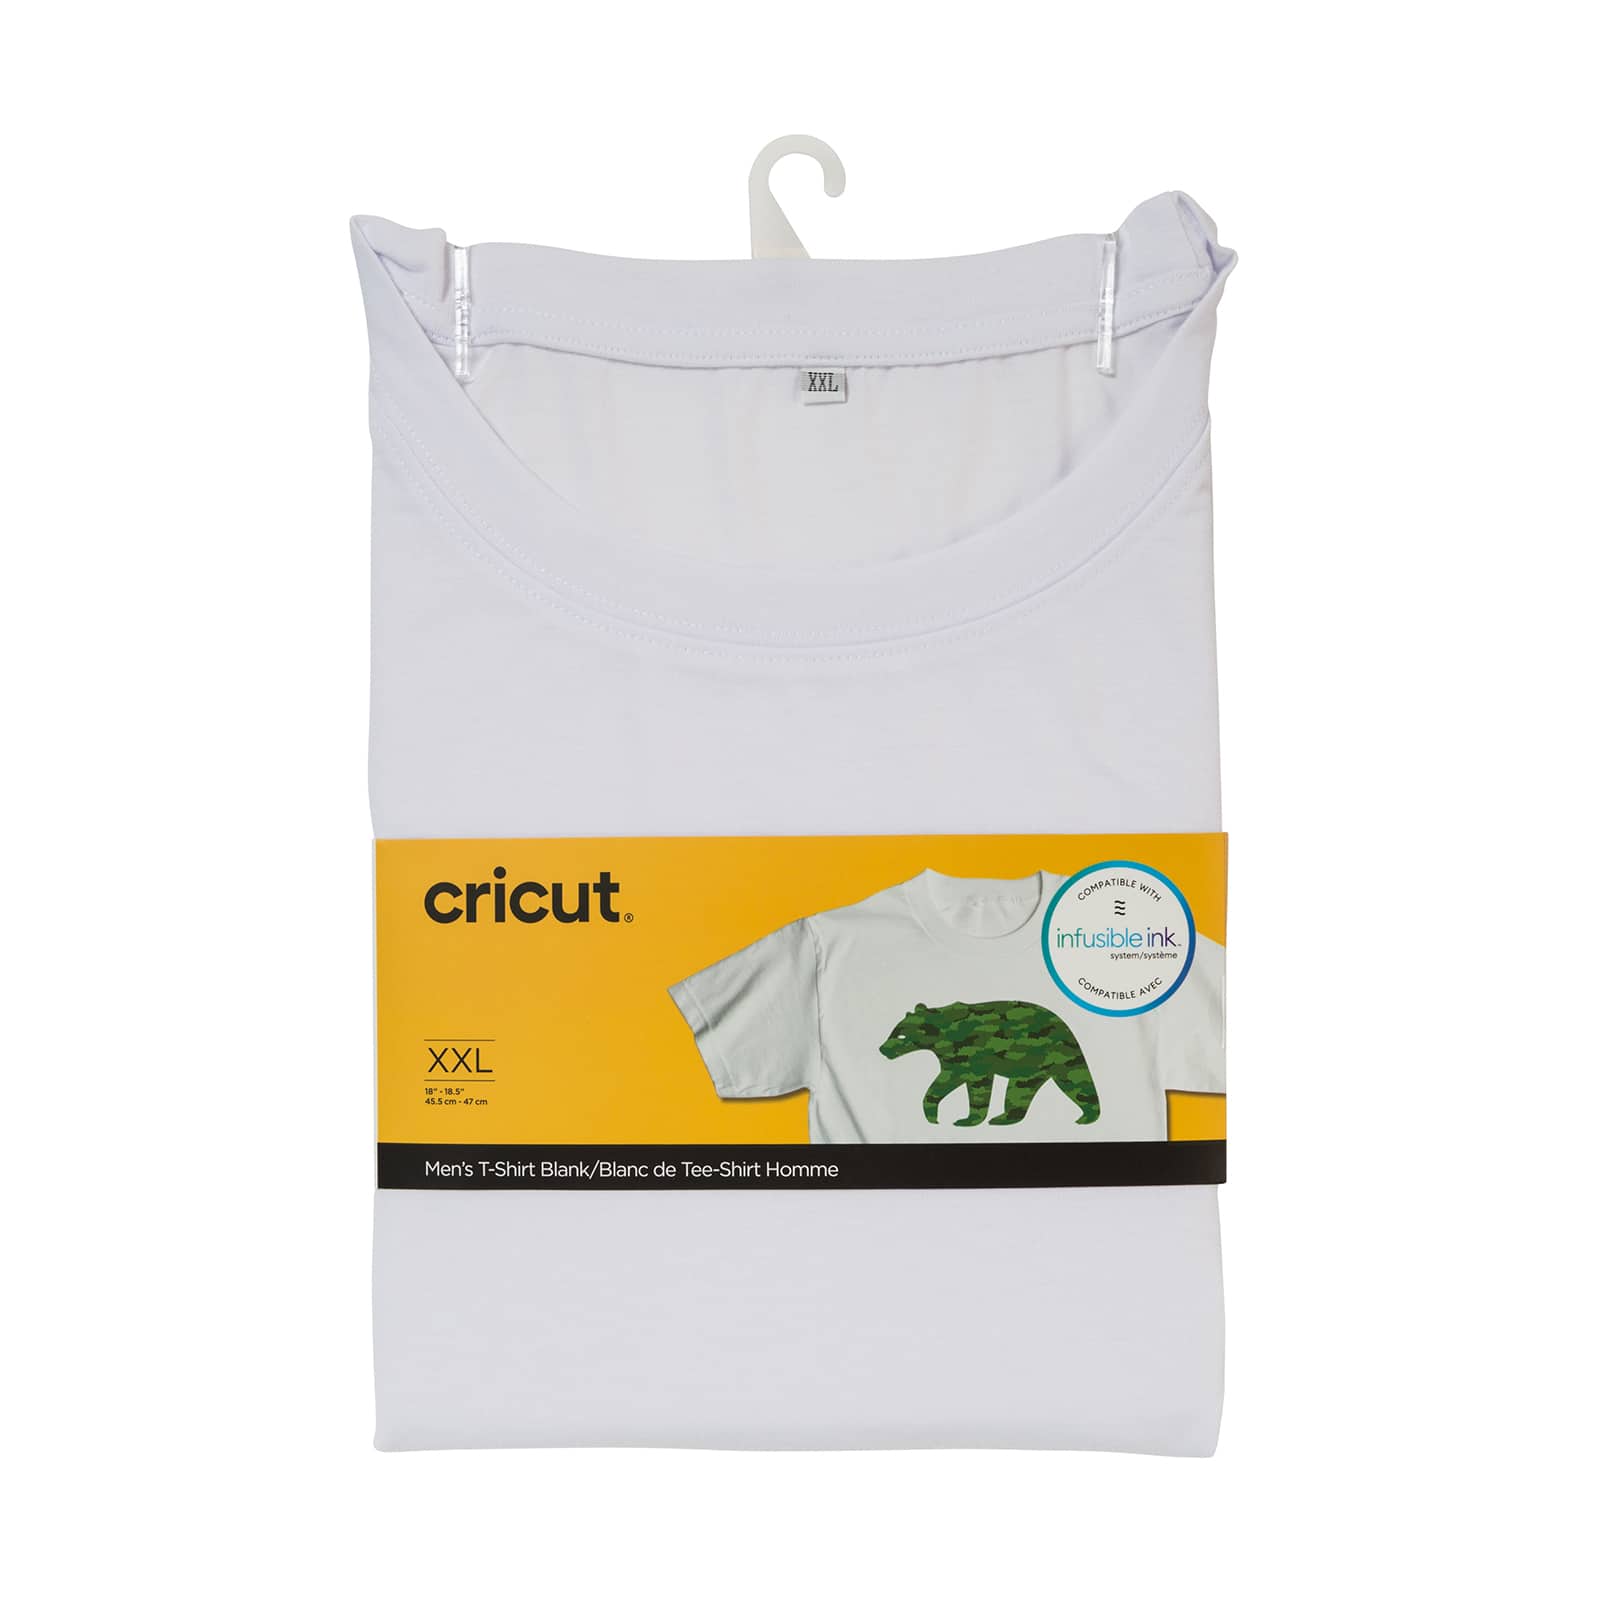 Cricut - Best Buy